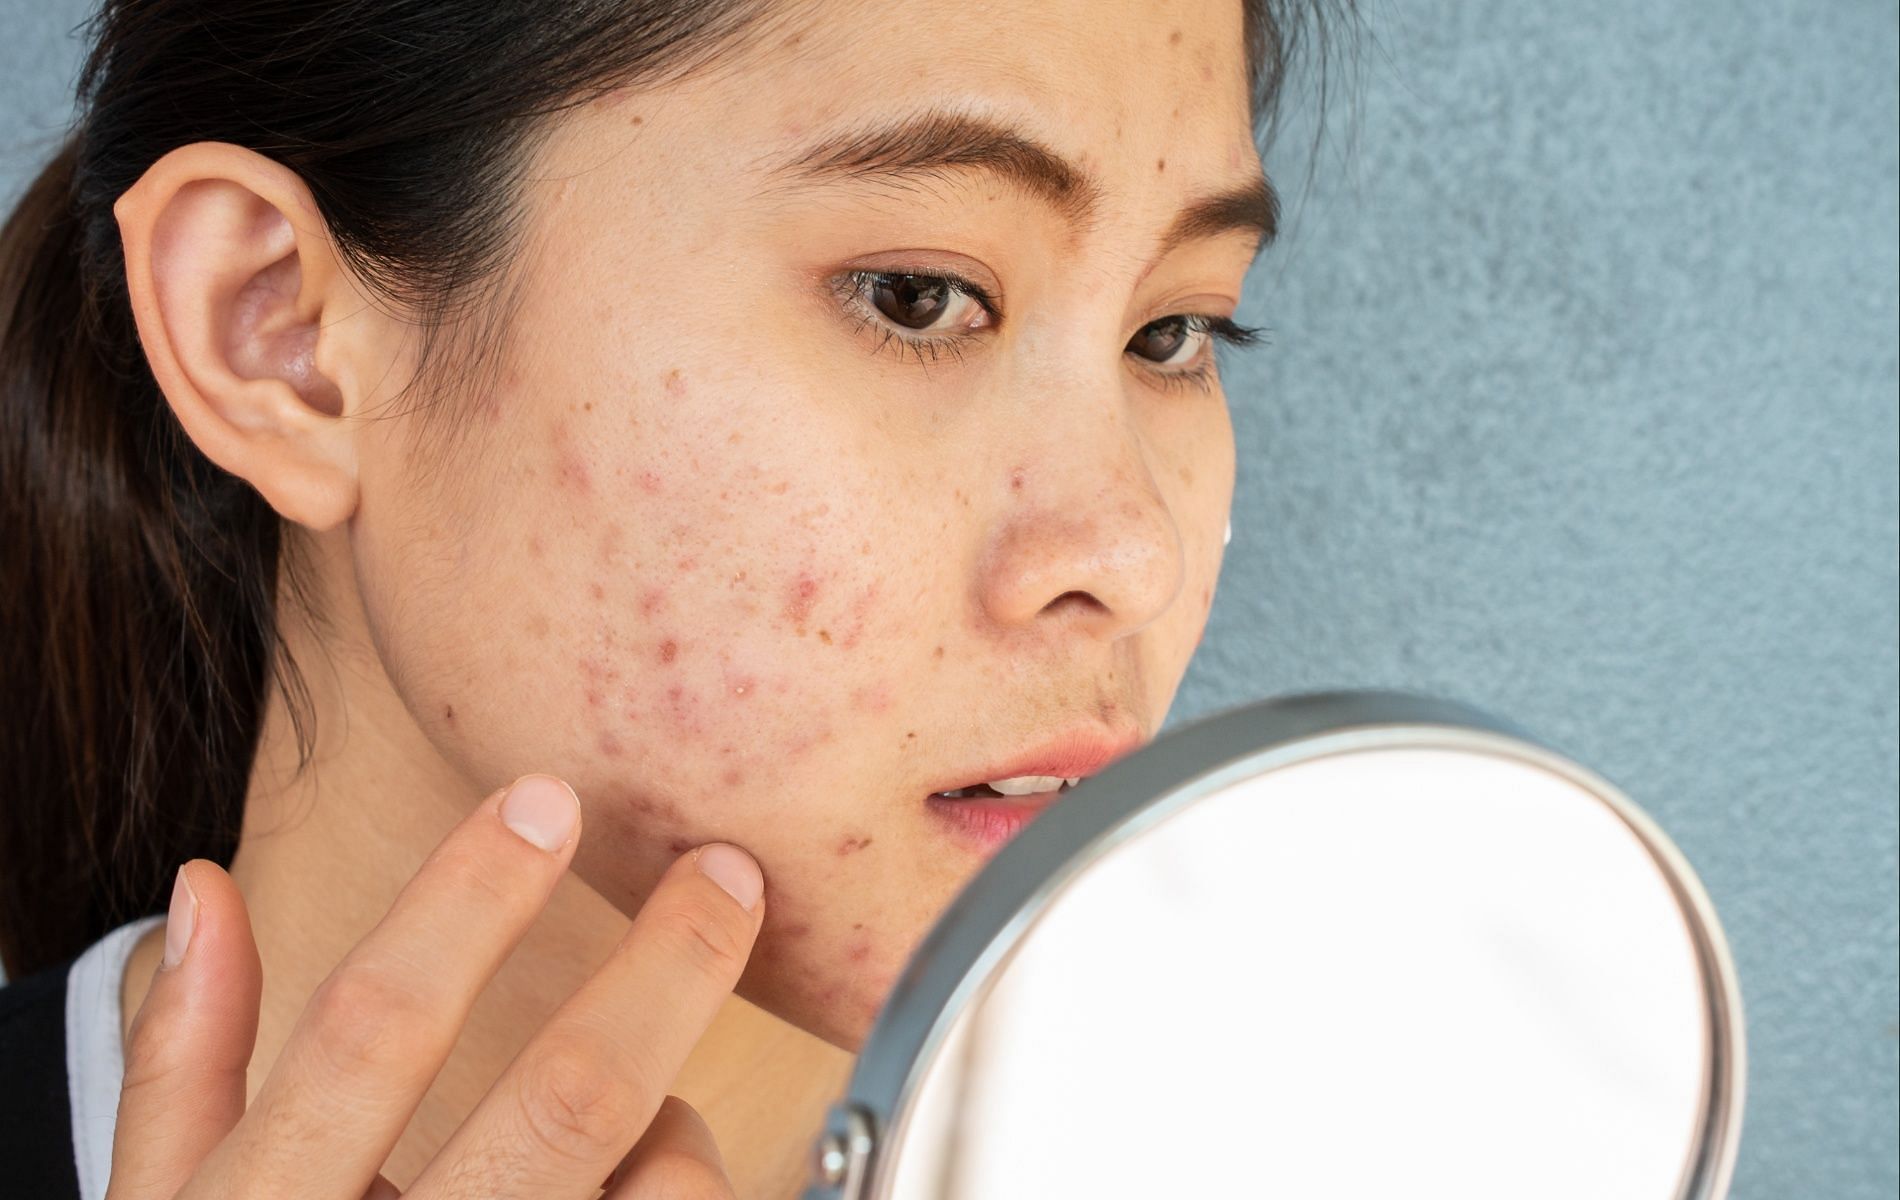 GLA in EPO might help reduce acne lesions (Image via Apotheco Pharmacy)